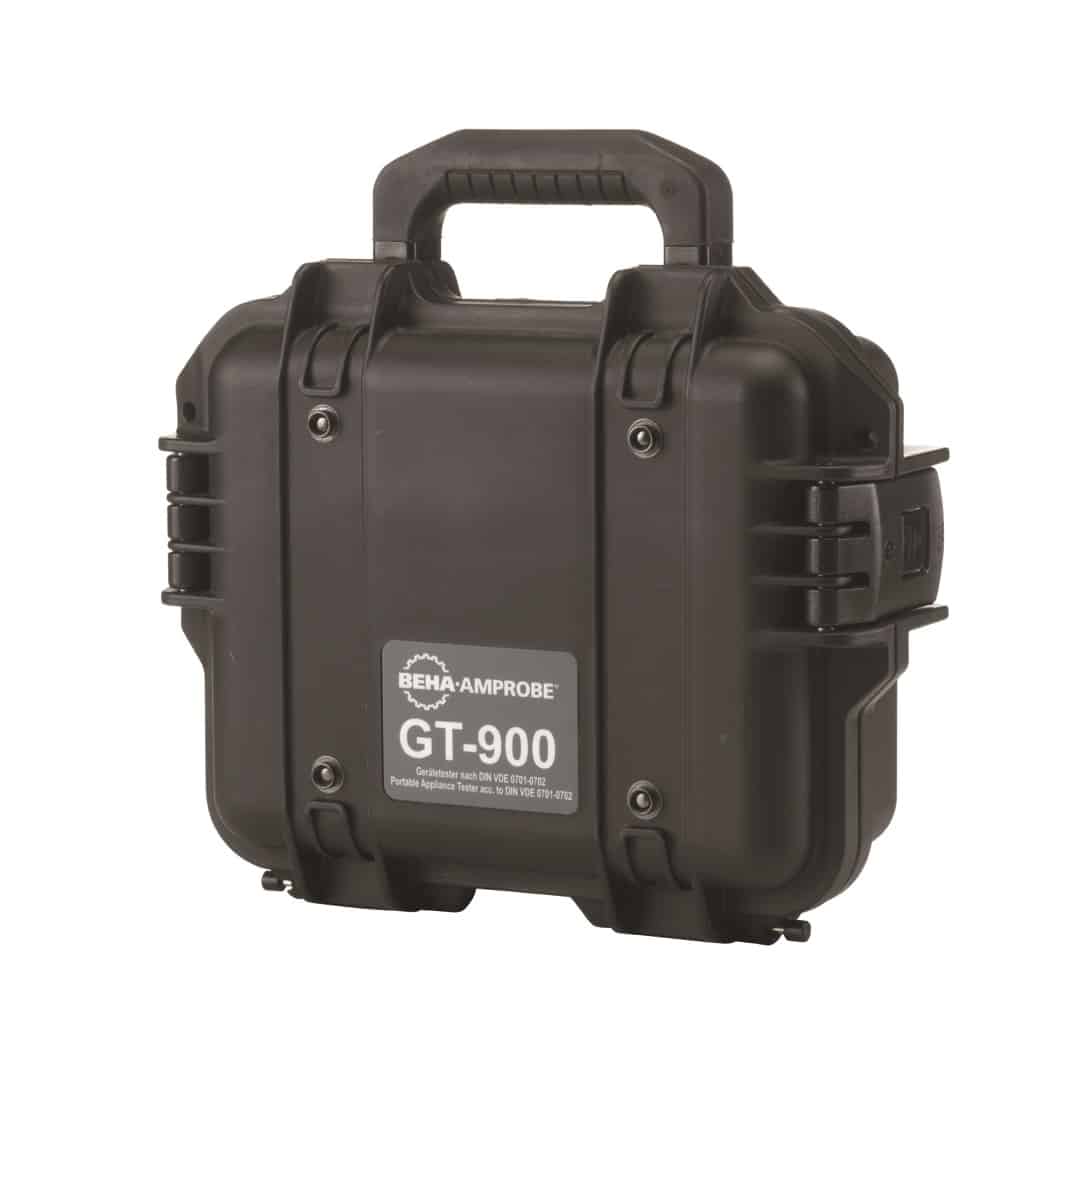 GT-900_Appliance Tester_300dpi_91x100mm_D_NR-22927